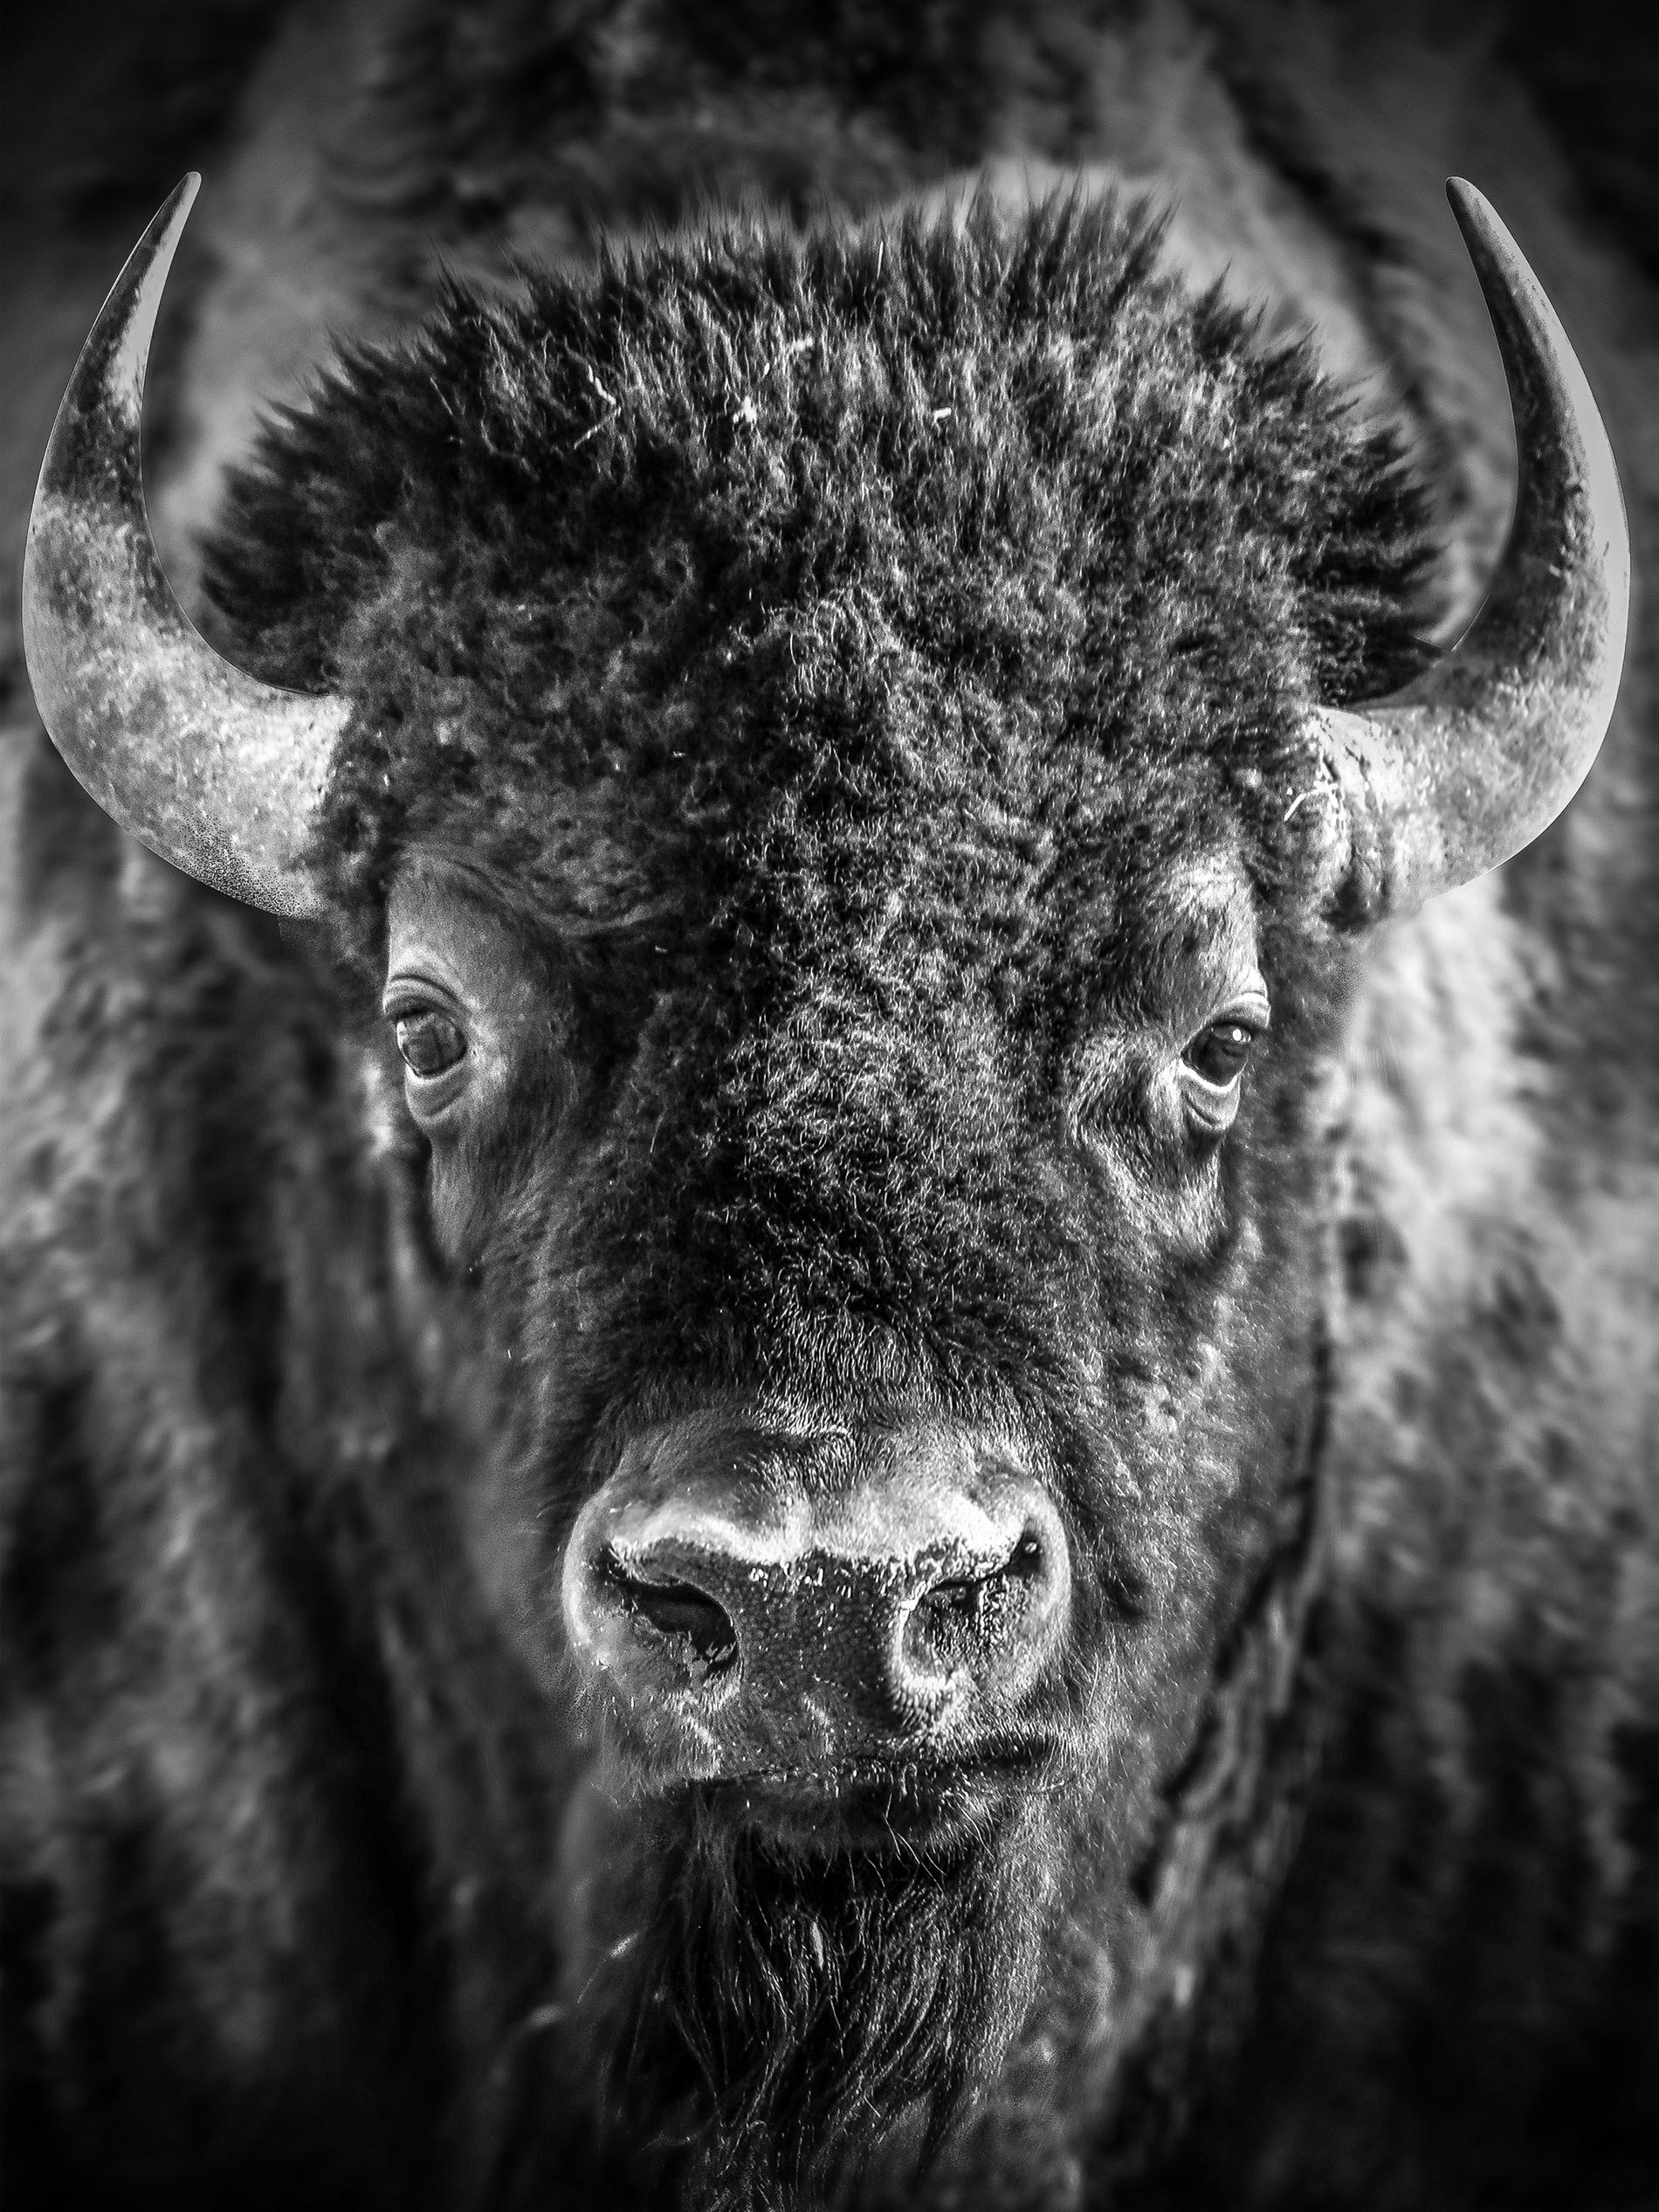 Shane Russeck Animal Print - "Bison Portrait" 36x48 - Black & White Photography, Bison, Photograph